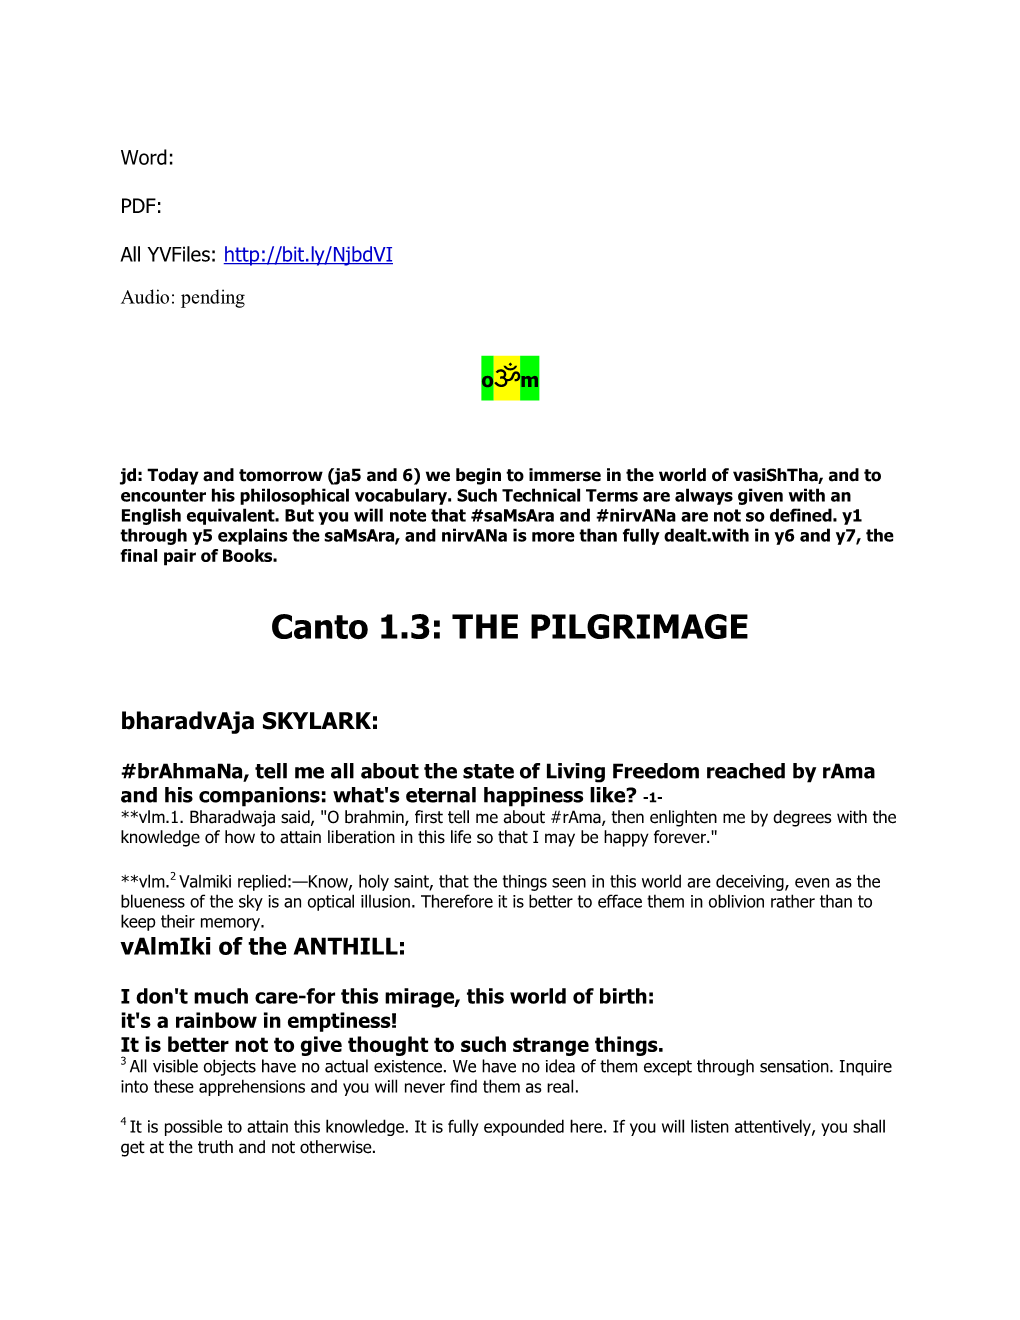 Canto 1.3: the PILGRIMAGE Bharadvaja SKYLARK